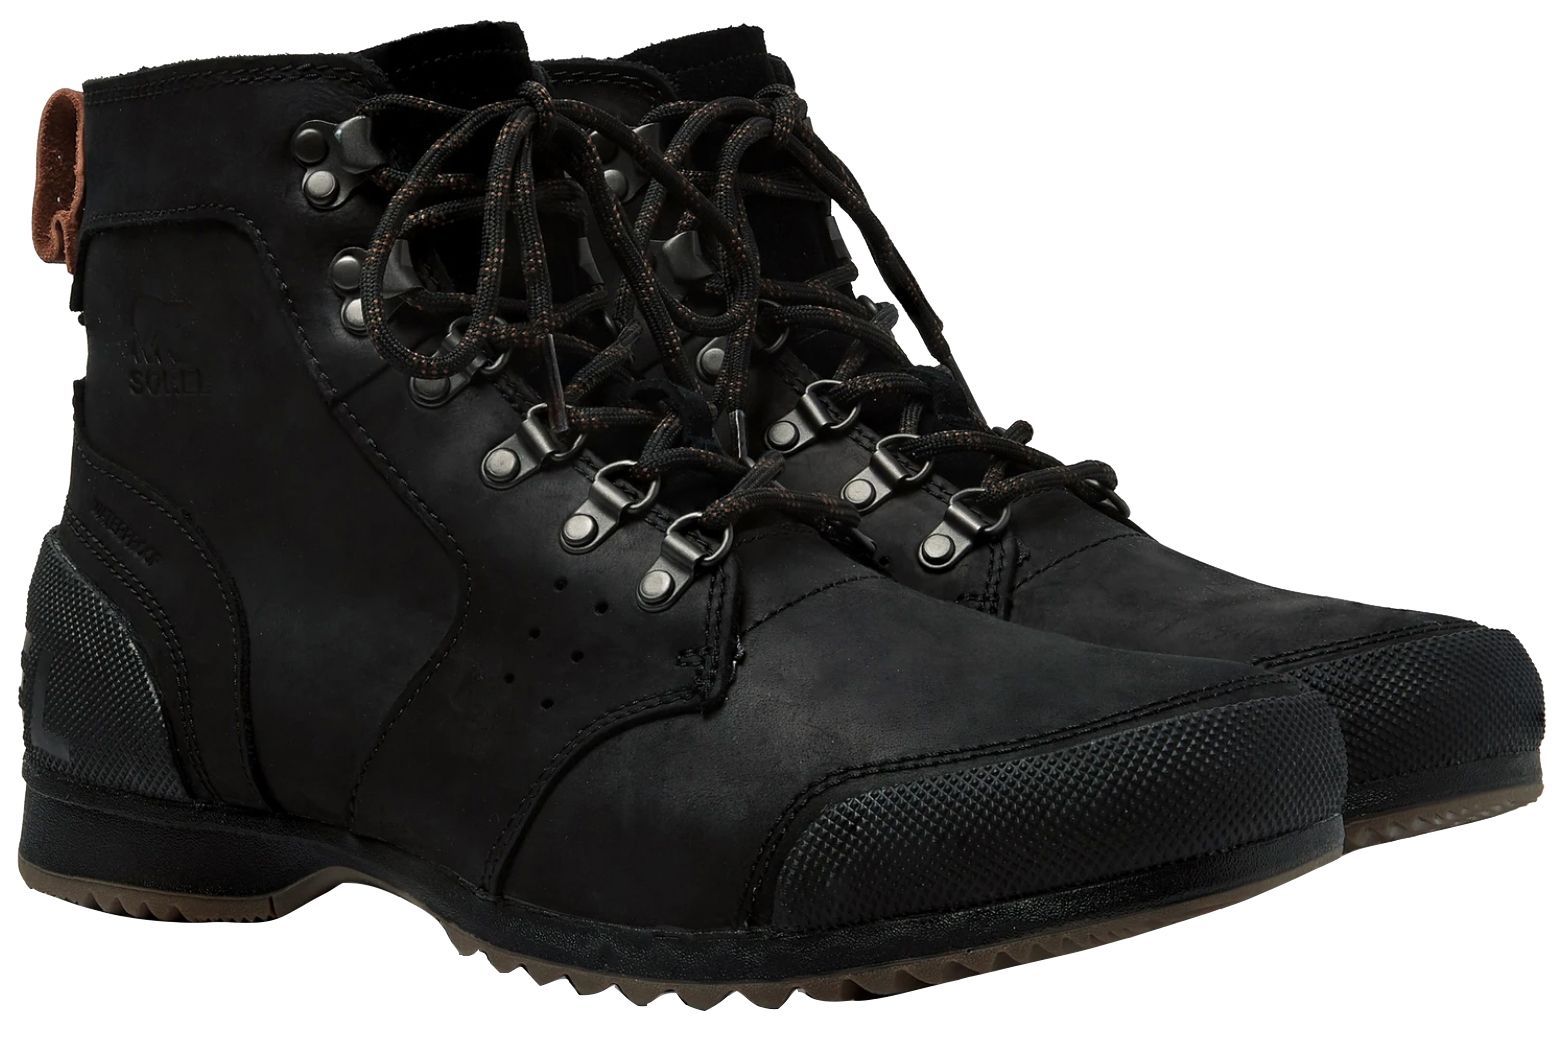 Black Dress Shoes - Ankeny Waterproof Boot